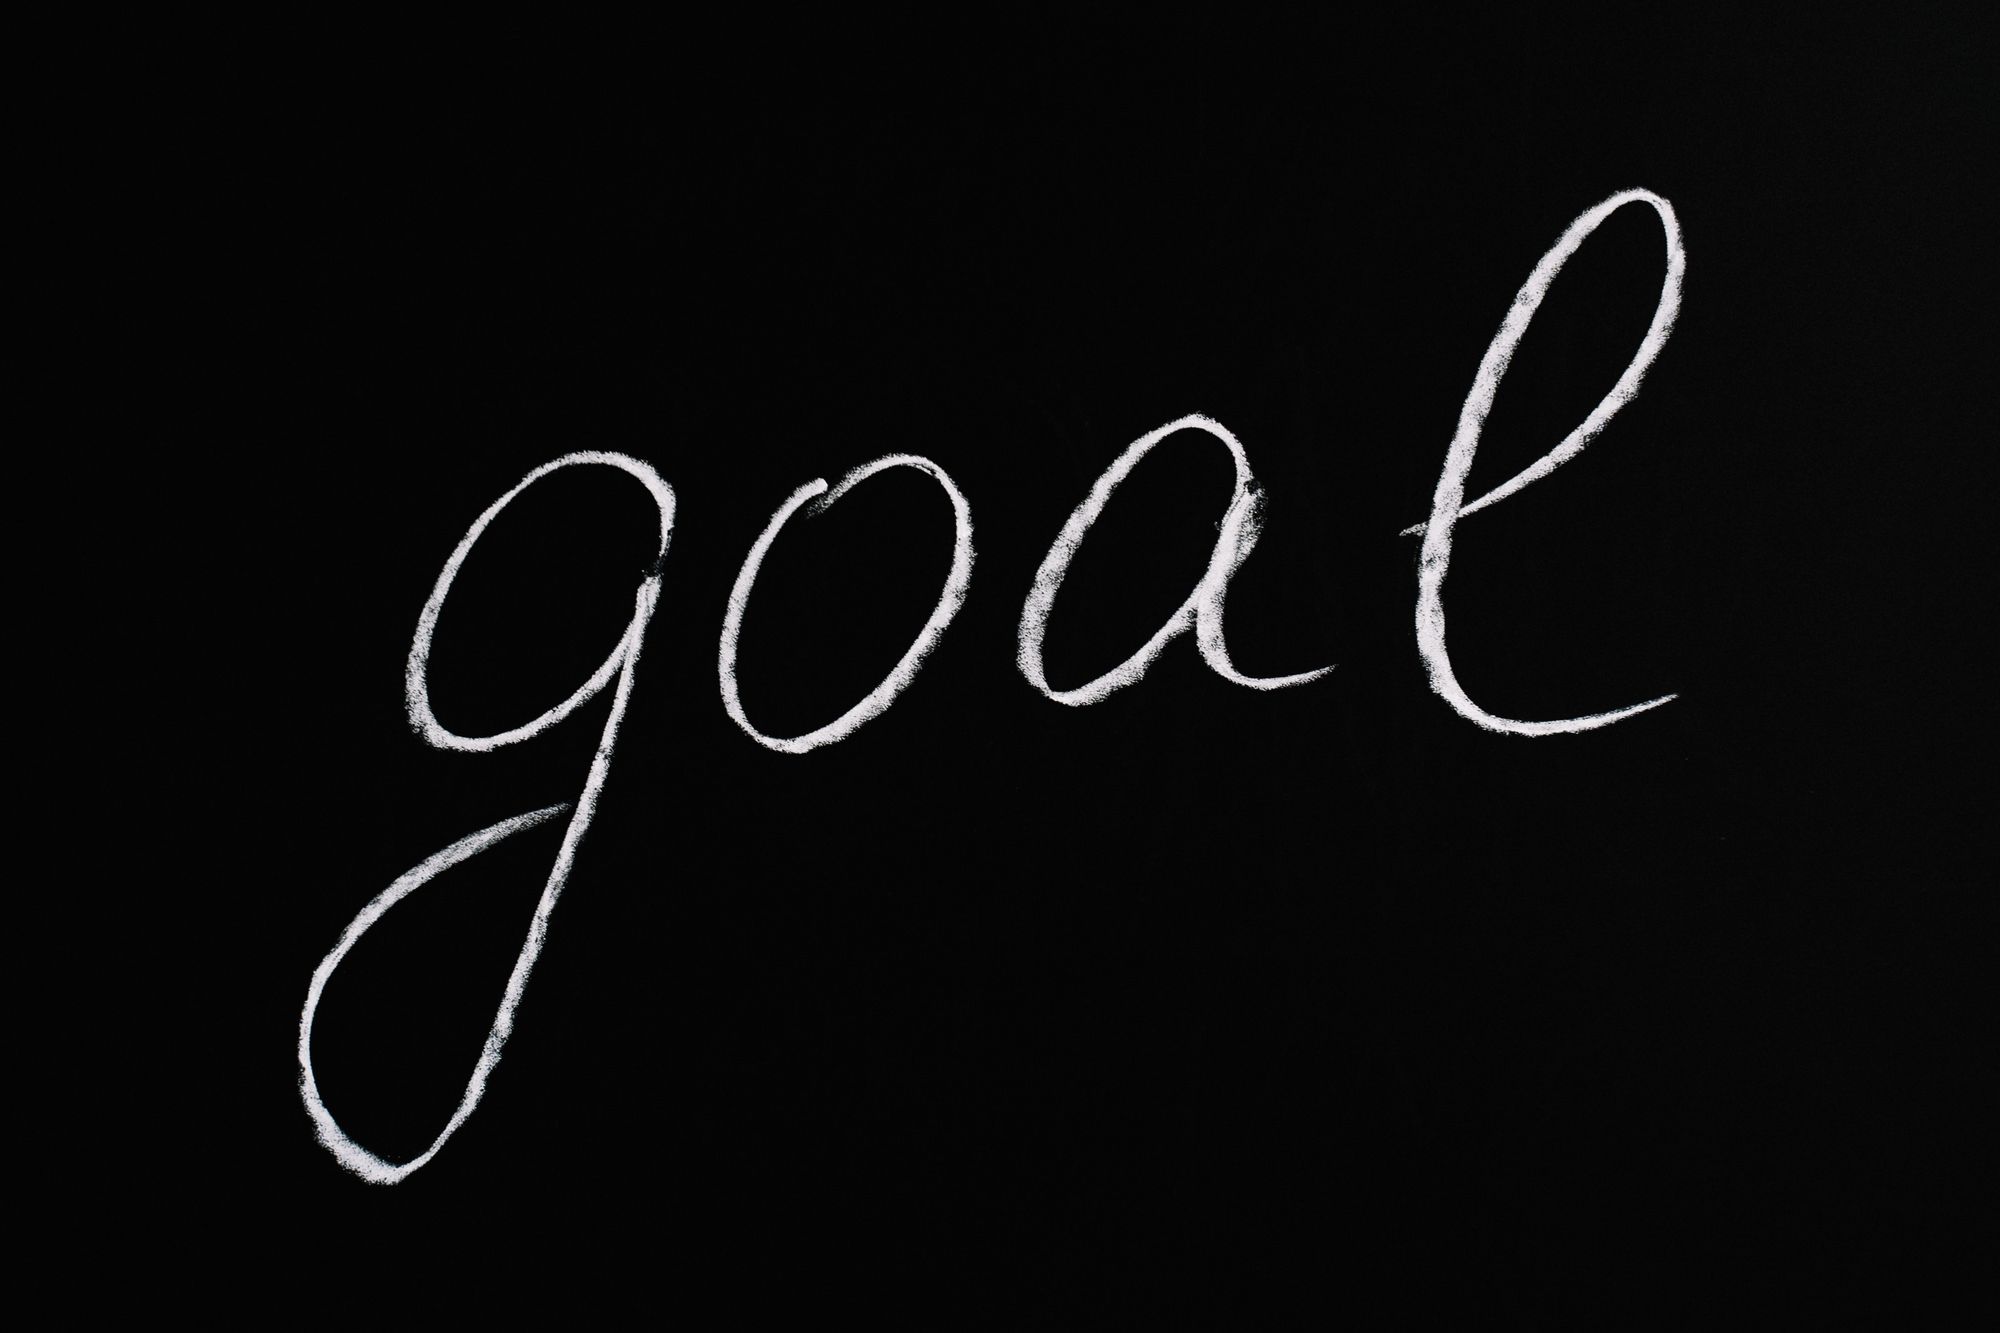 Image showing "goal" lettering on a black background